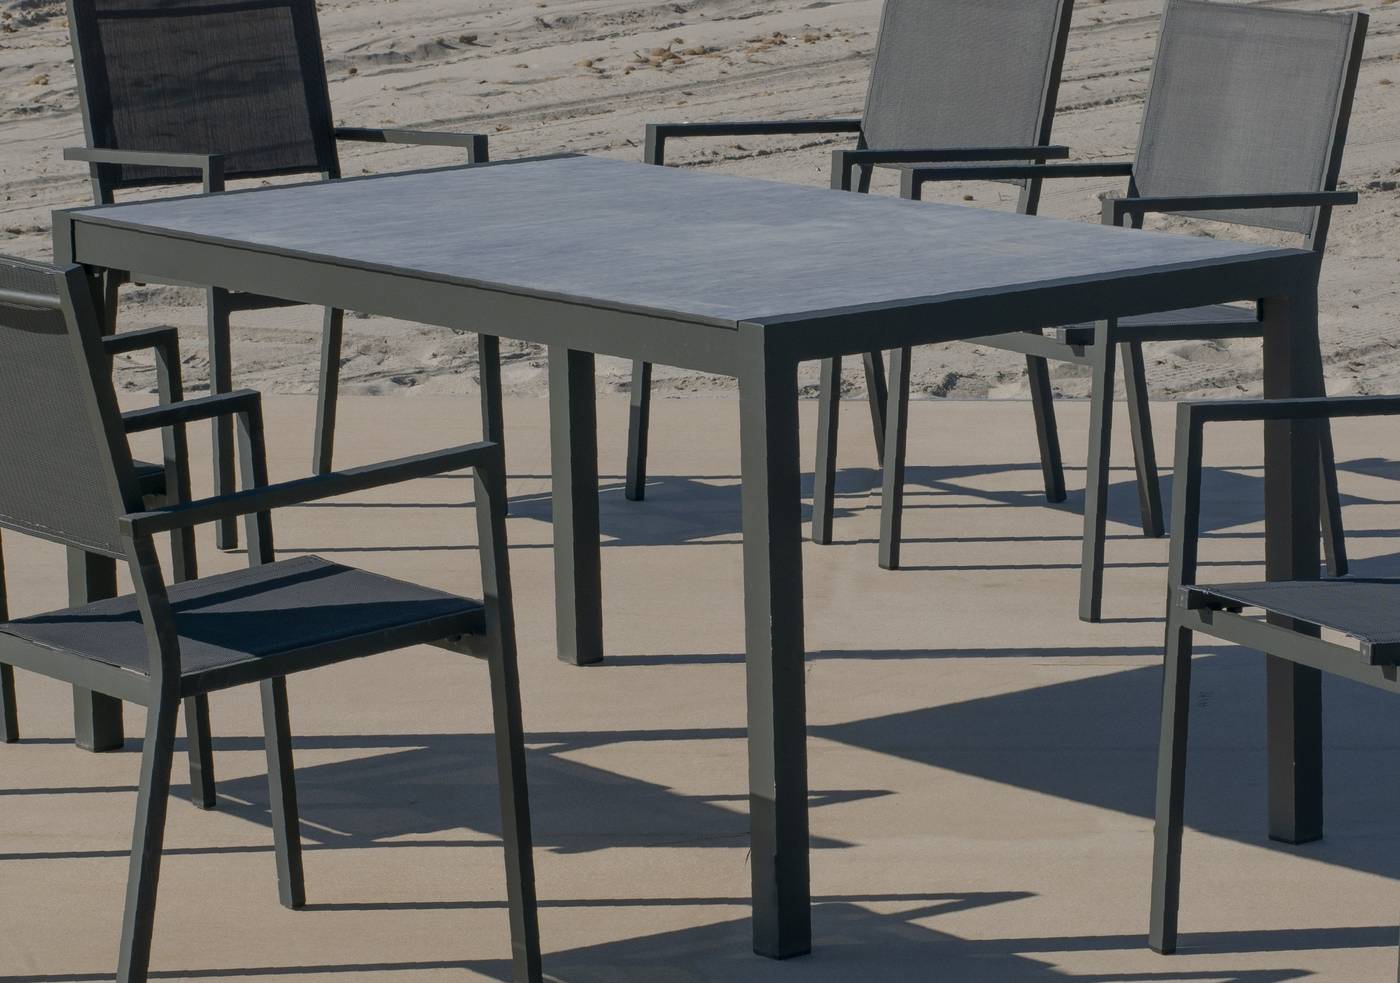 Set Córcega-160-4 Janeiro - Conjunto de aluminio para jardín: Mesa rectangular con tablero HPL de 160 cm + 4 sillones altos de textilen. Colores: blanco y antracita.<br/><br/><b>OFERTA VÁLIDA HASTA FIN DE EXISTENCIAS</b>.<br/><b>PLAZO ENTREGA: 2 a 3 semanas</b>.